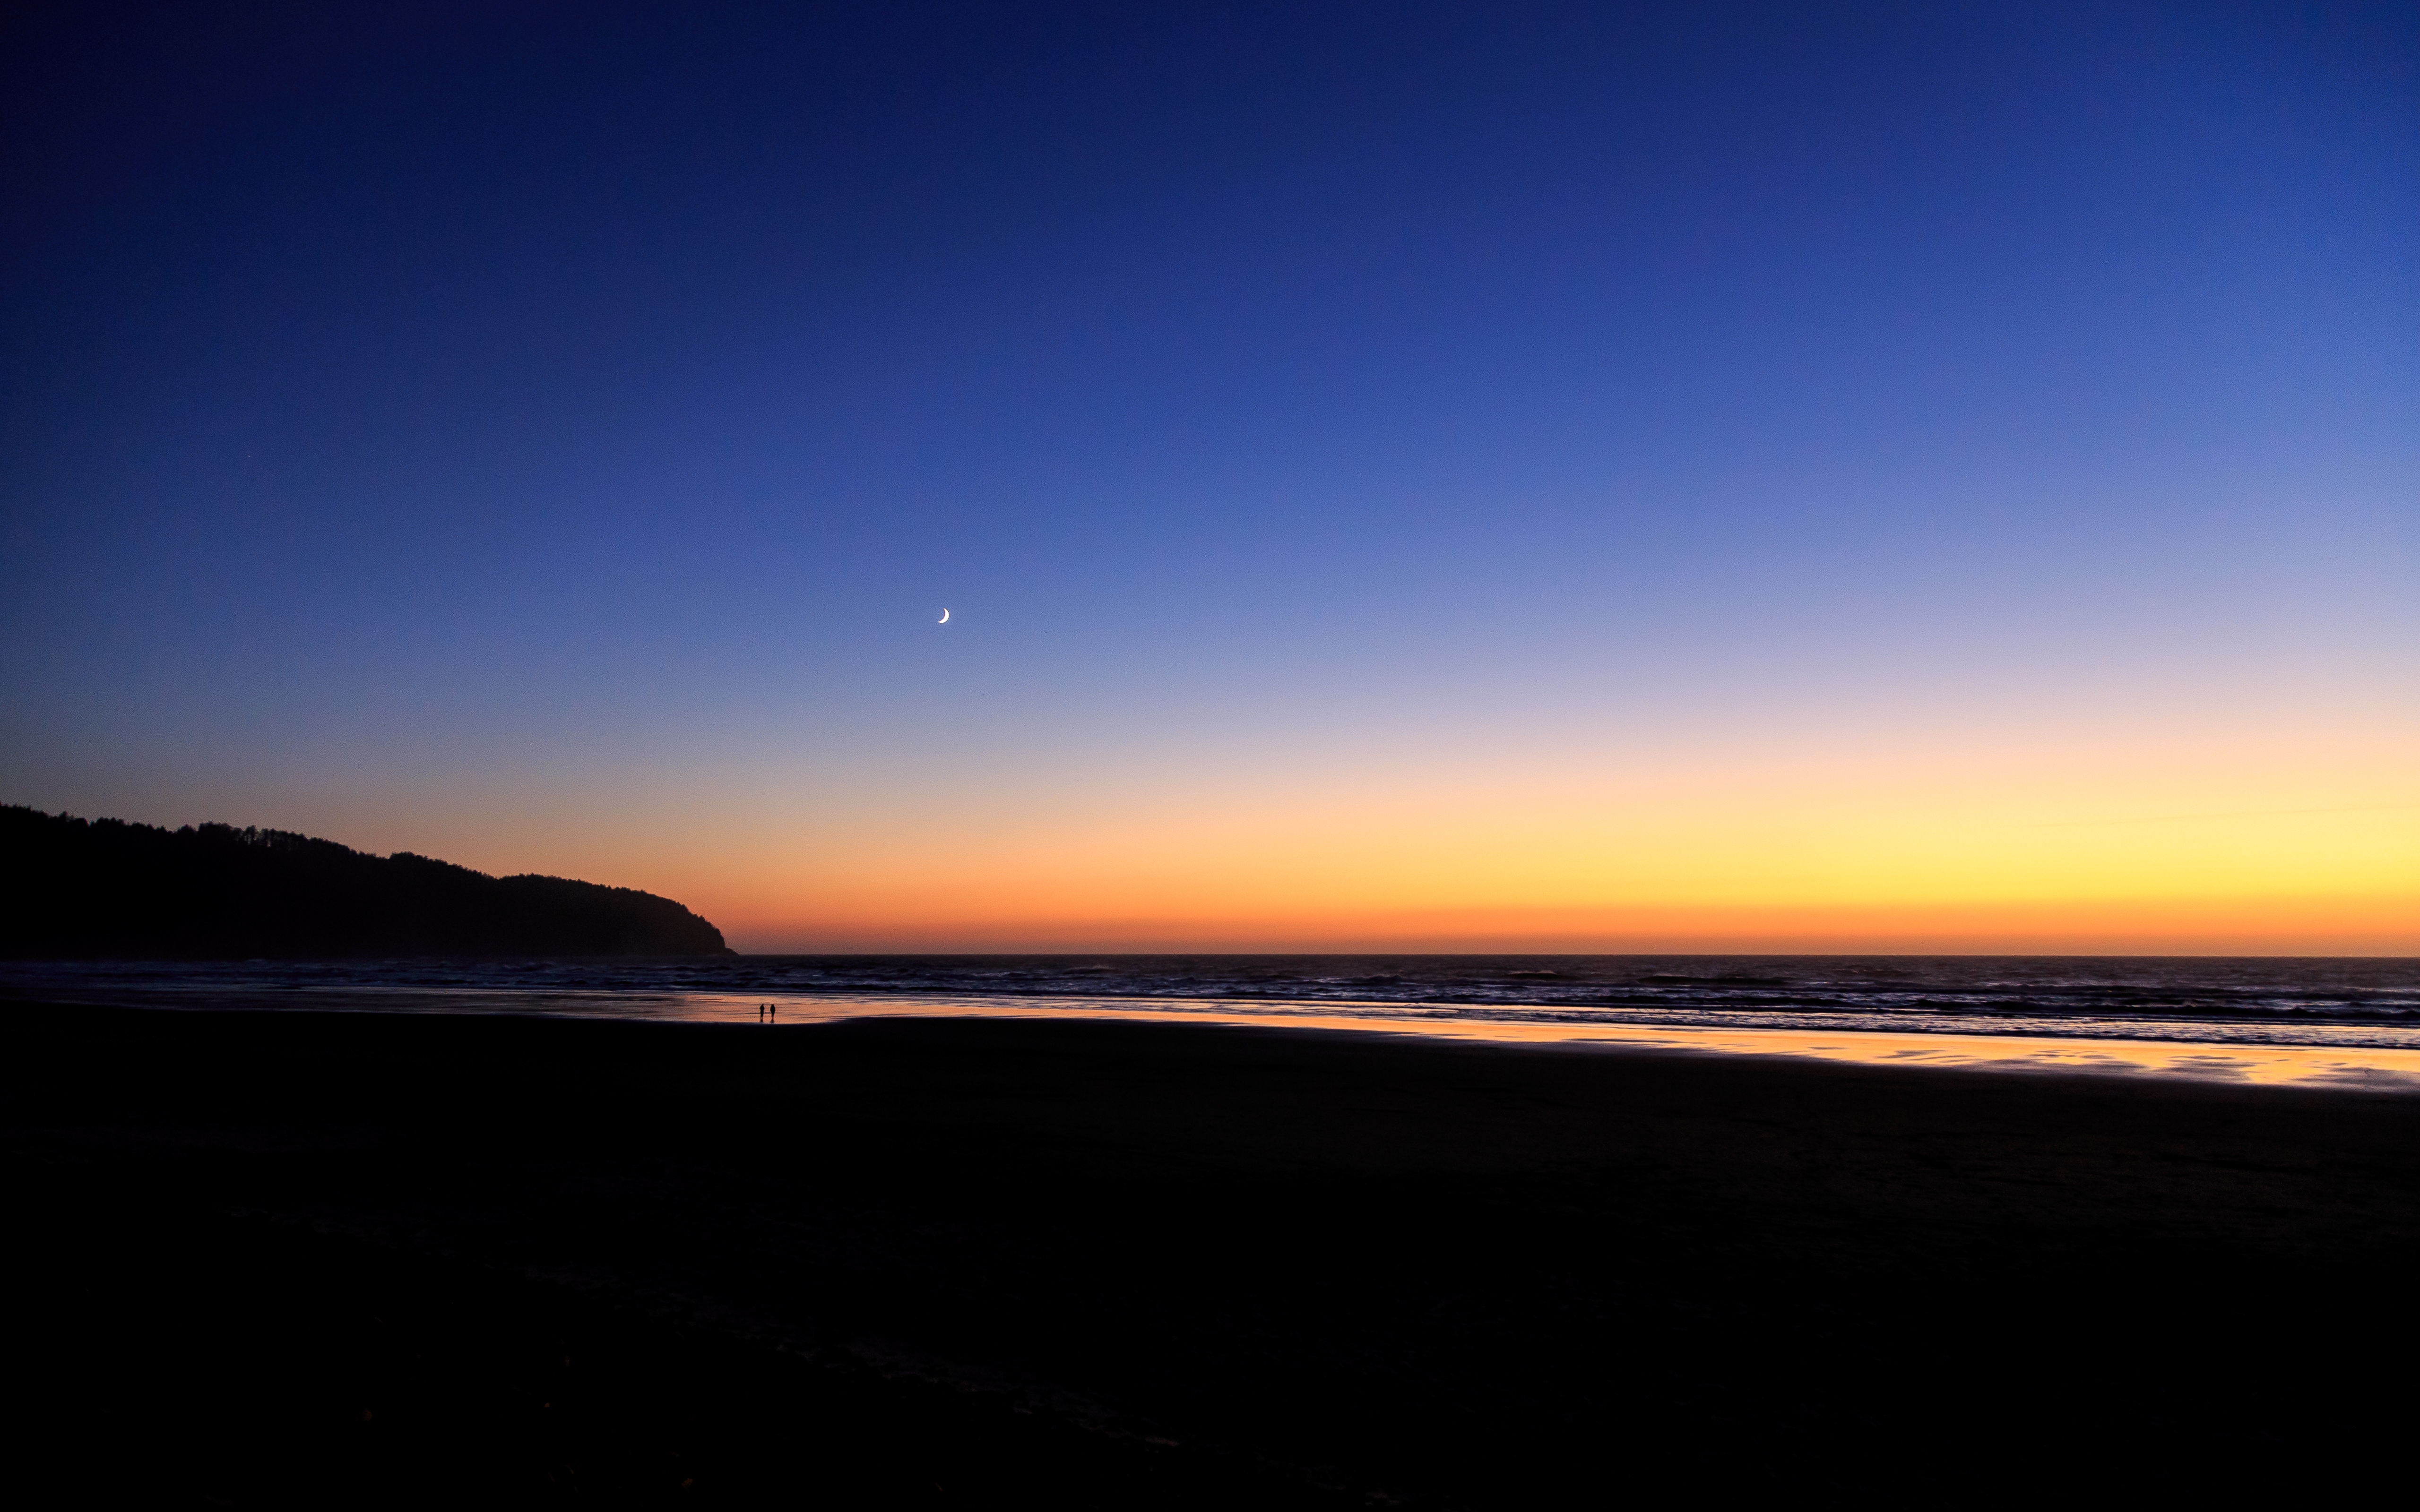 HD wallpaper, Clear Sky, Silhouette, Moon, Landscape, Seascape, Ocean, 5K, Horizon, Beach, Sunset